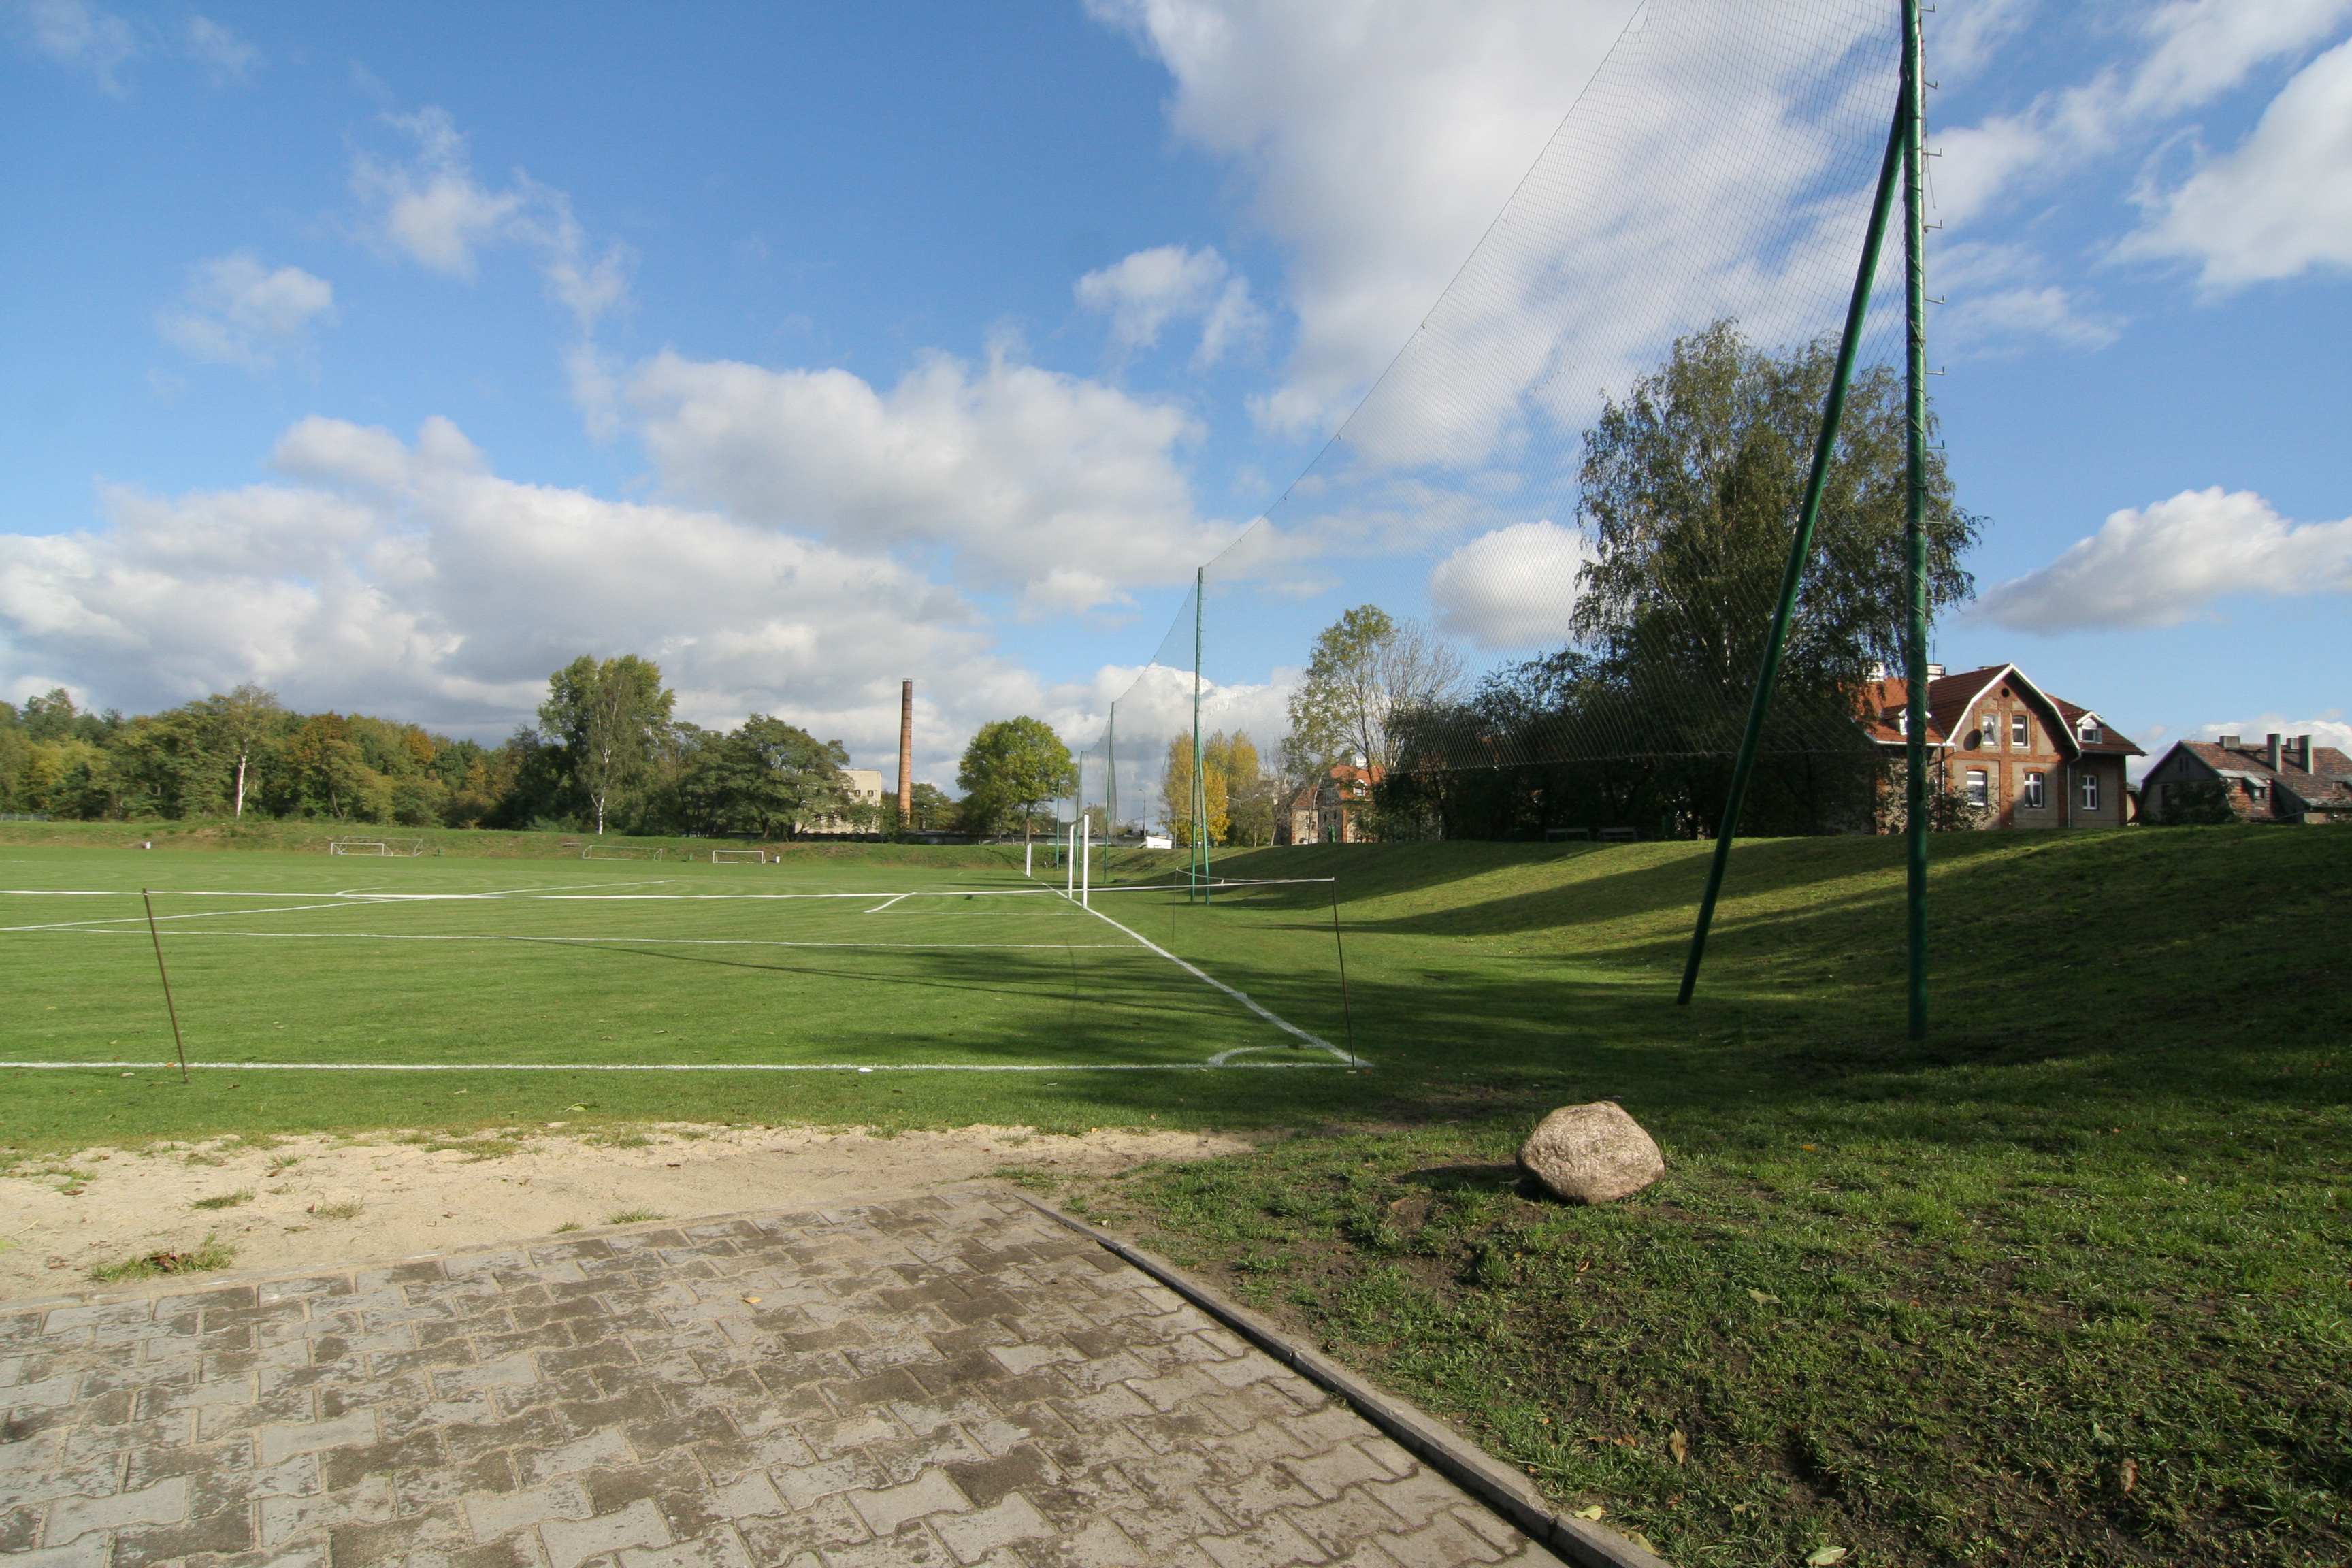 Le terrain de football du club GKS Piast à Szobiszowice